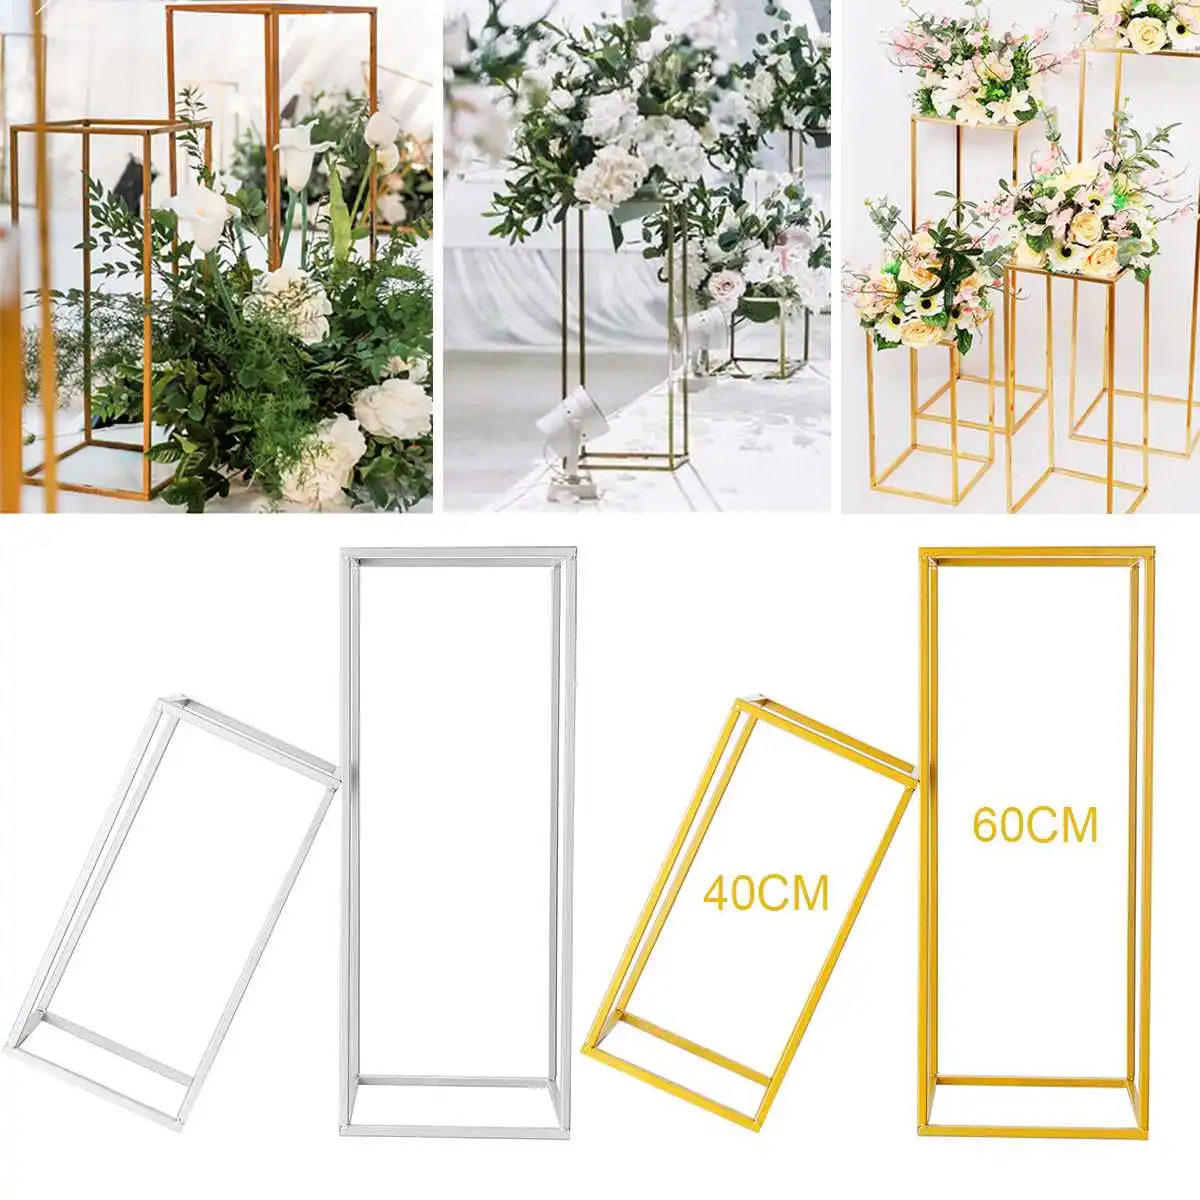 

Vases Column Stand Rustproof Decoration Party Geometric Holder Centerpiece Prop Iron Art Detachable Flower Rack Wedding Floor